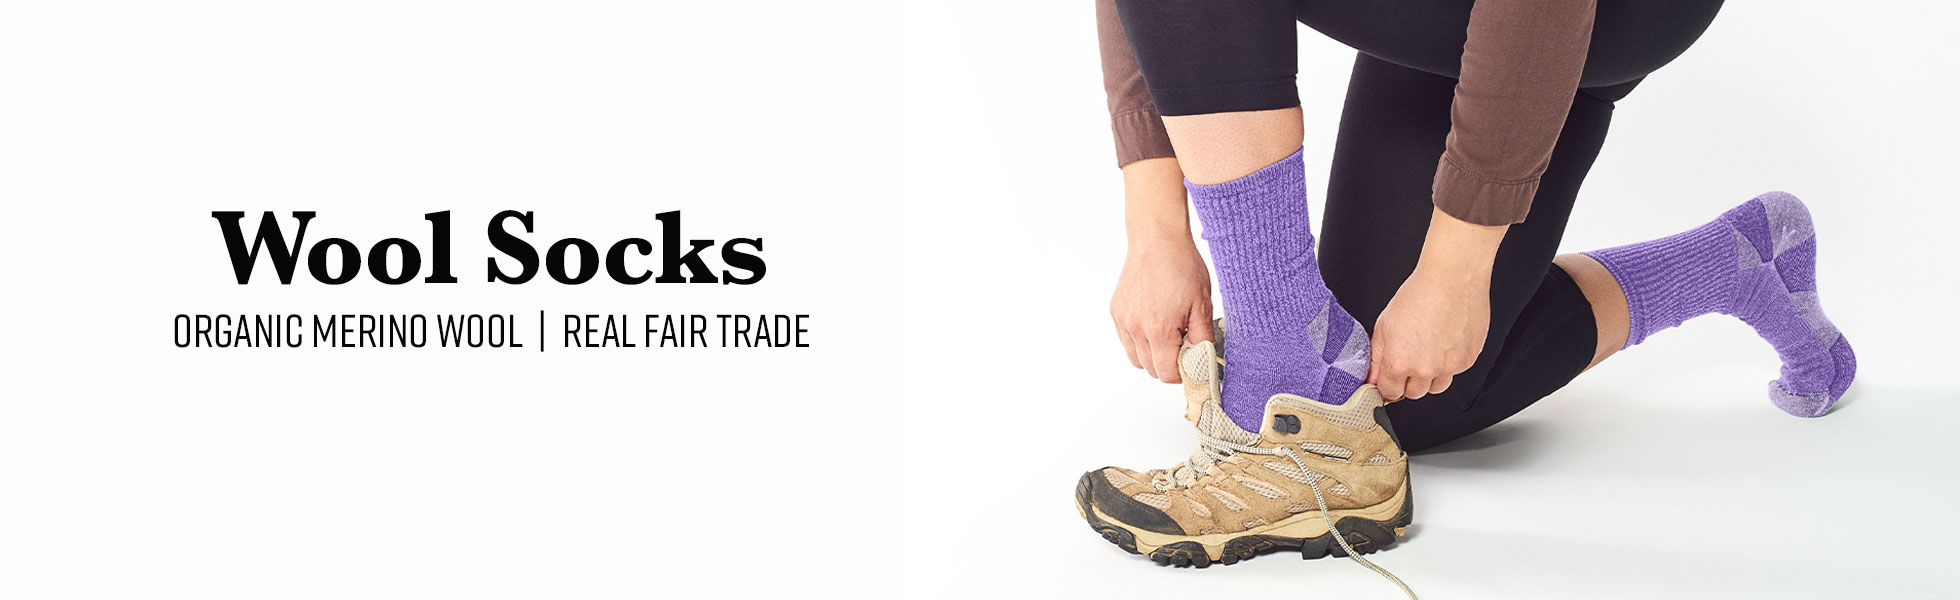  Person putting on shoes wearing Purple Urban Hiker socks. Text Next to them reads: Wool Socks Organic Merino Wool Real Fair Trade.